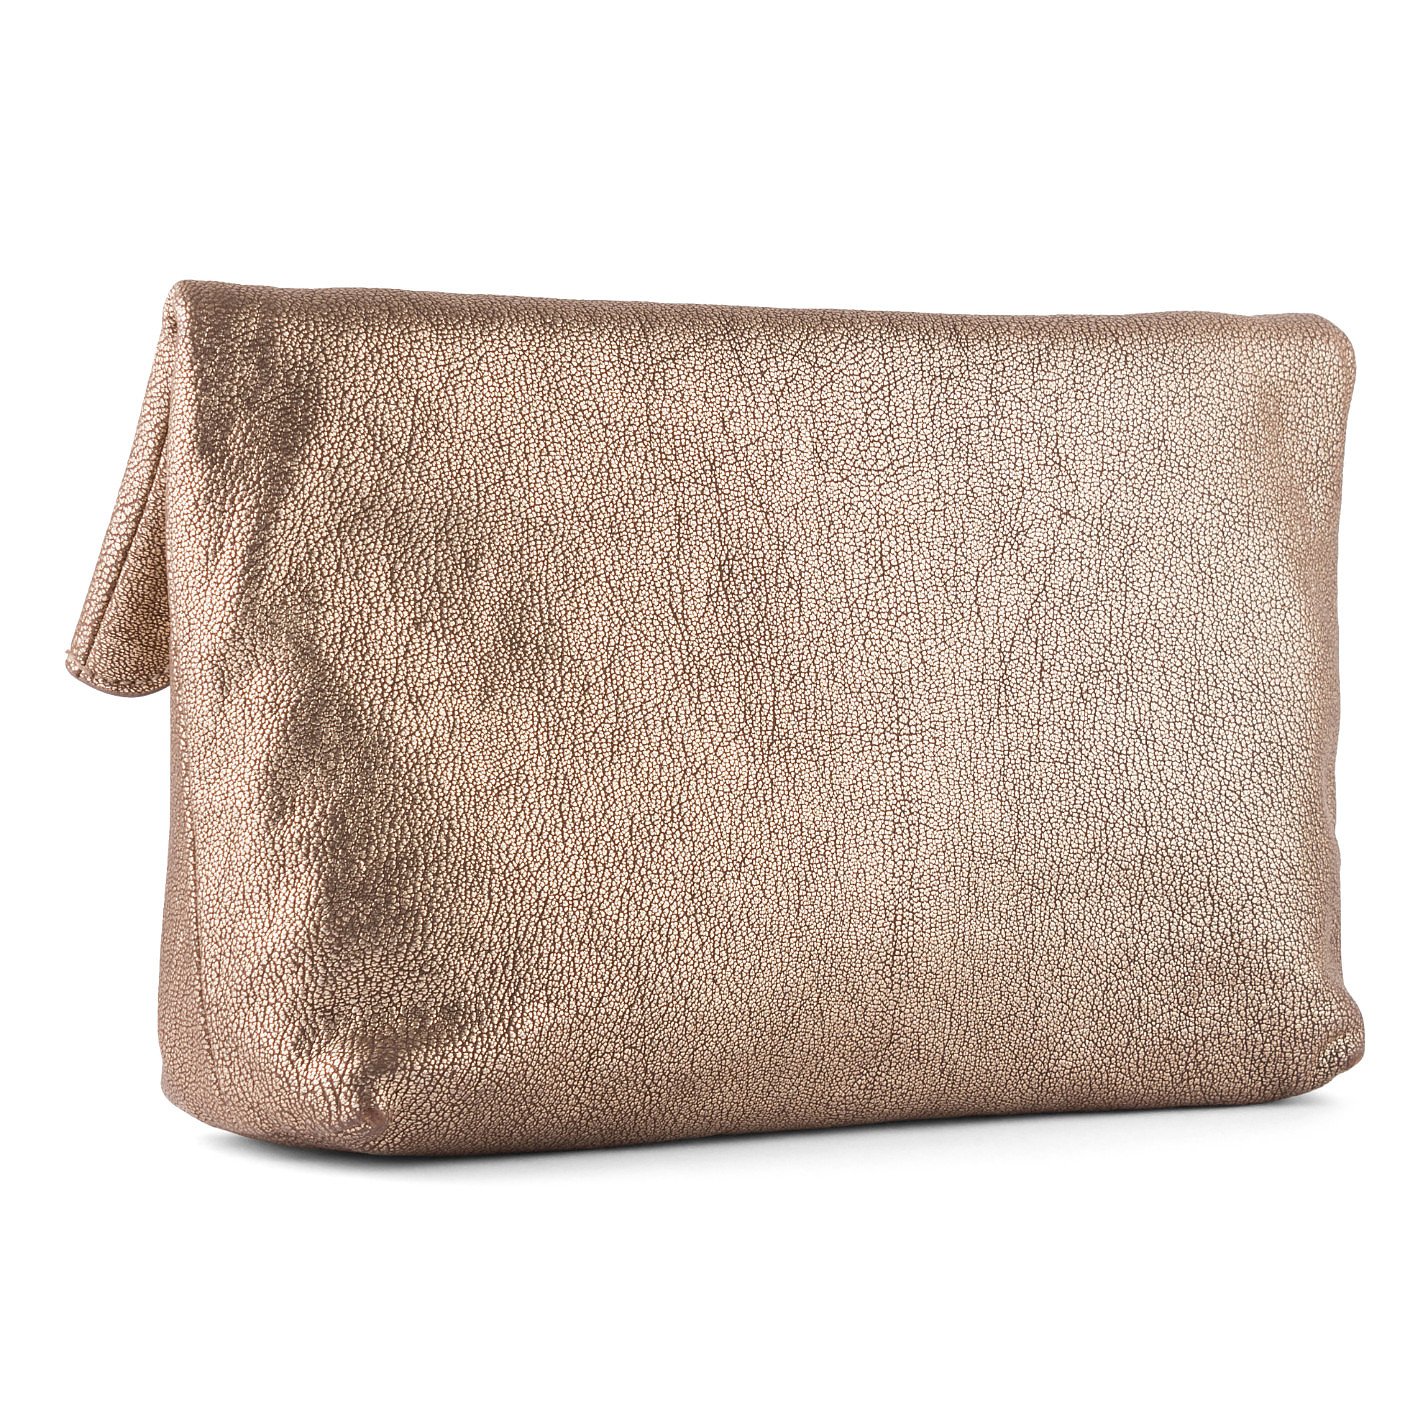 Mulberry Metallic Textured Clutch Bag